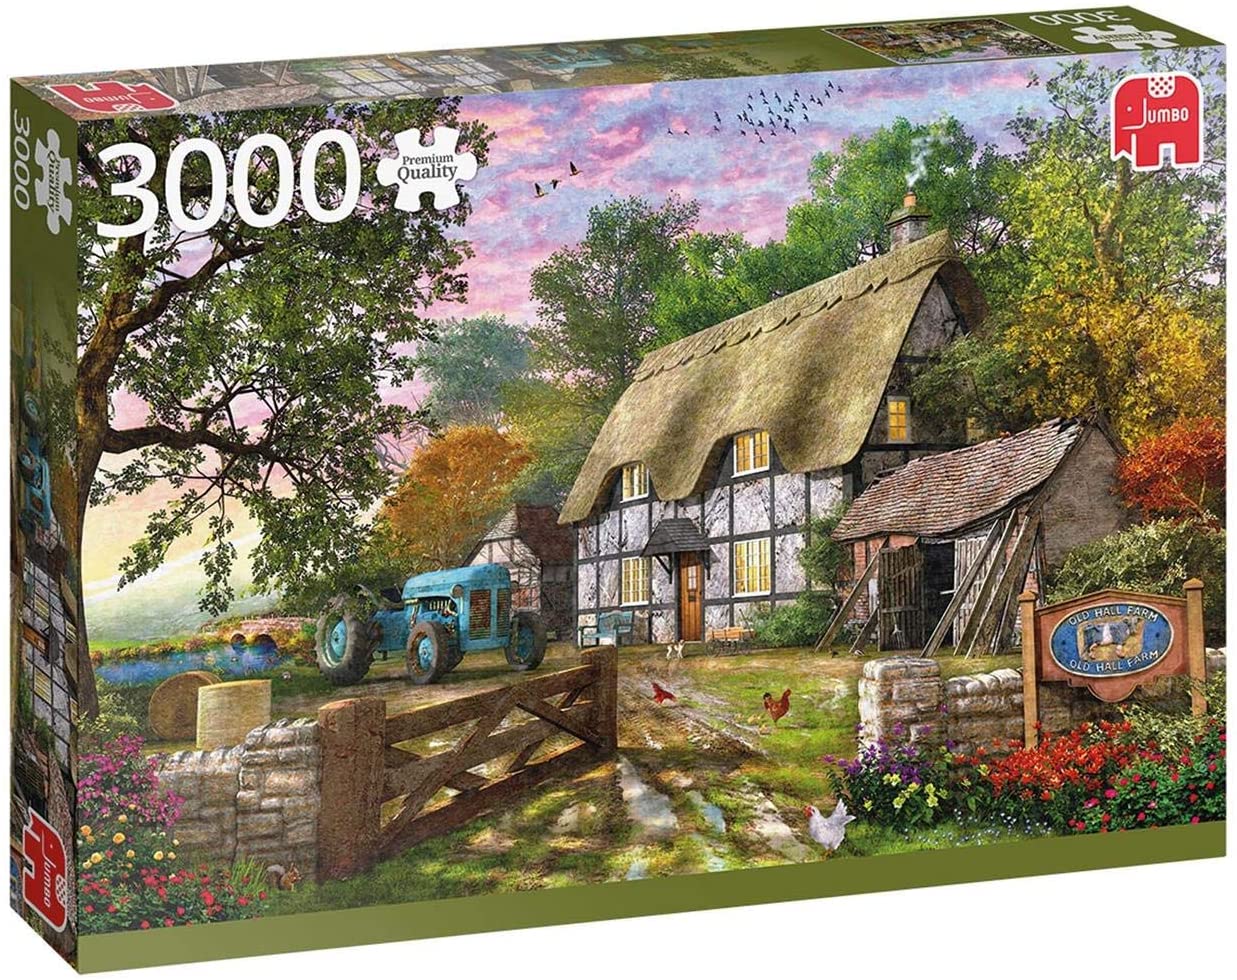 Puzzle The Farmhouse Jumbo 18870 3000 Pieces Jigsaw Puzzles Cottages